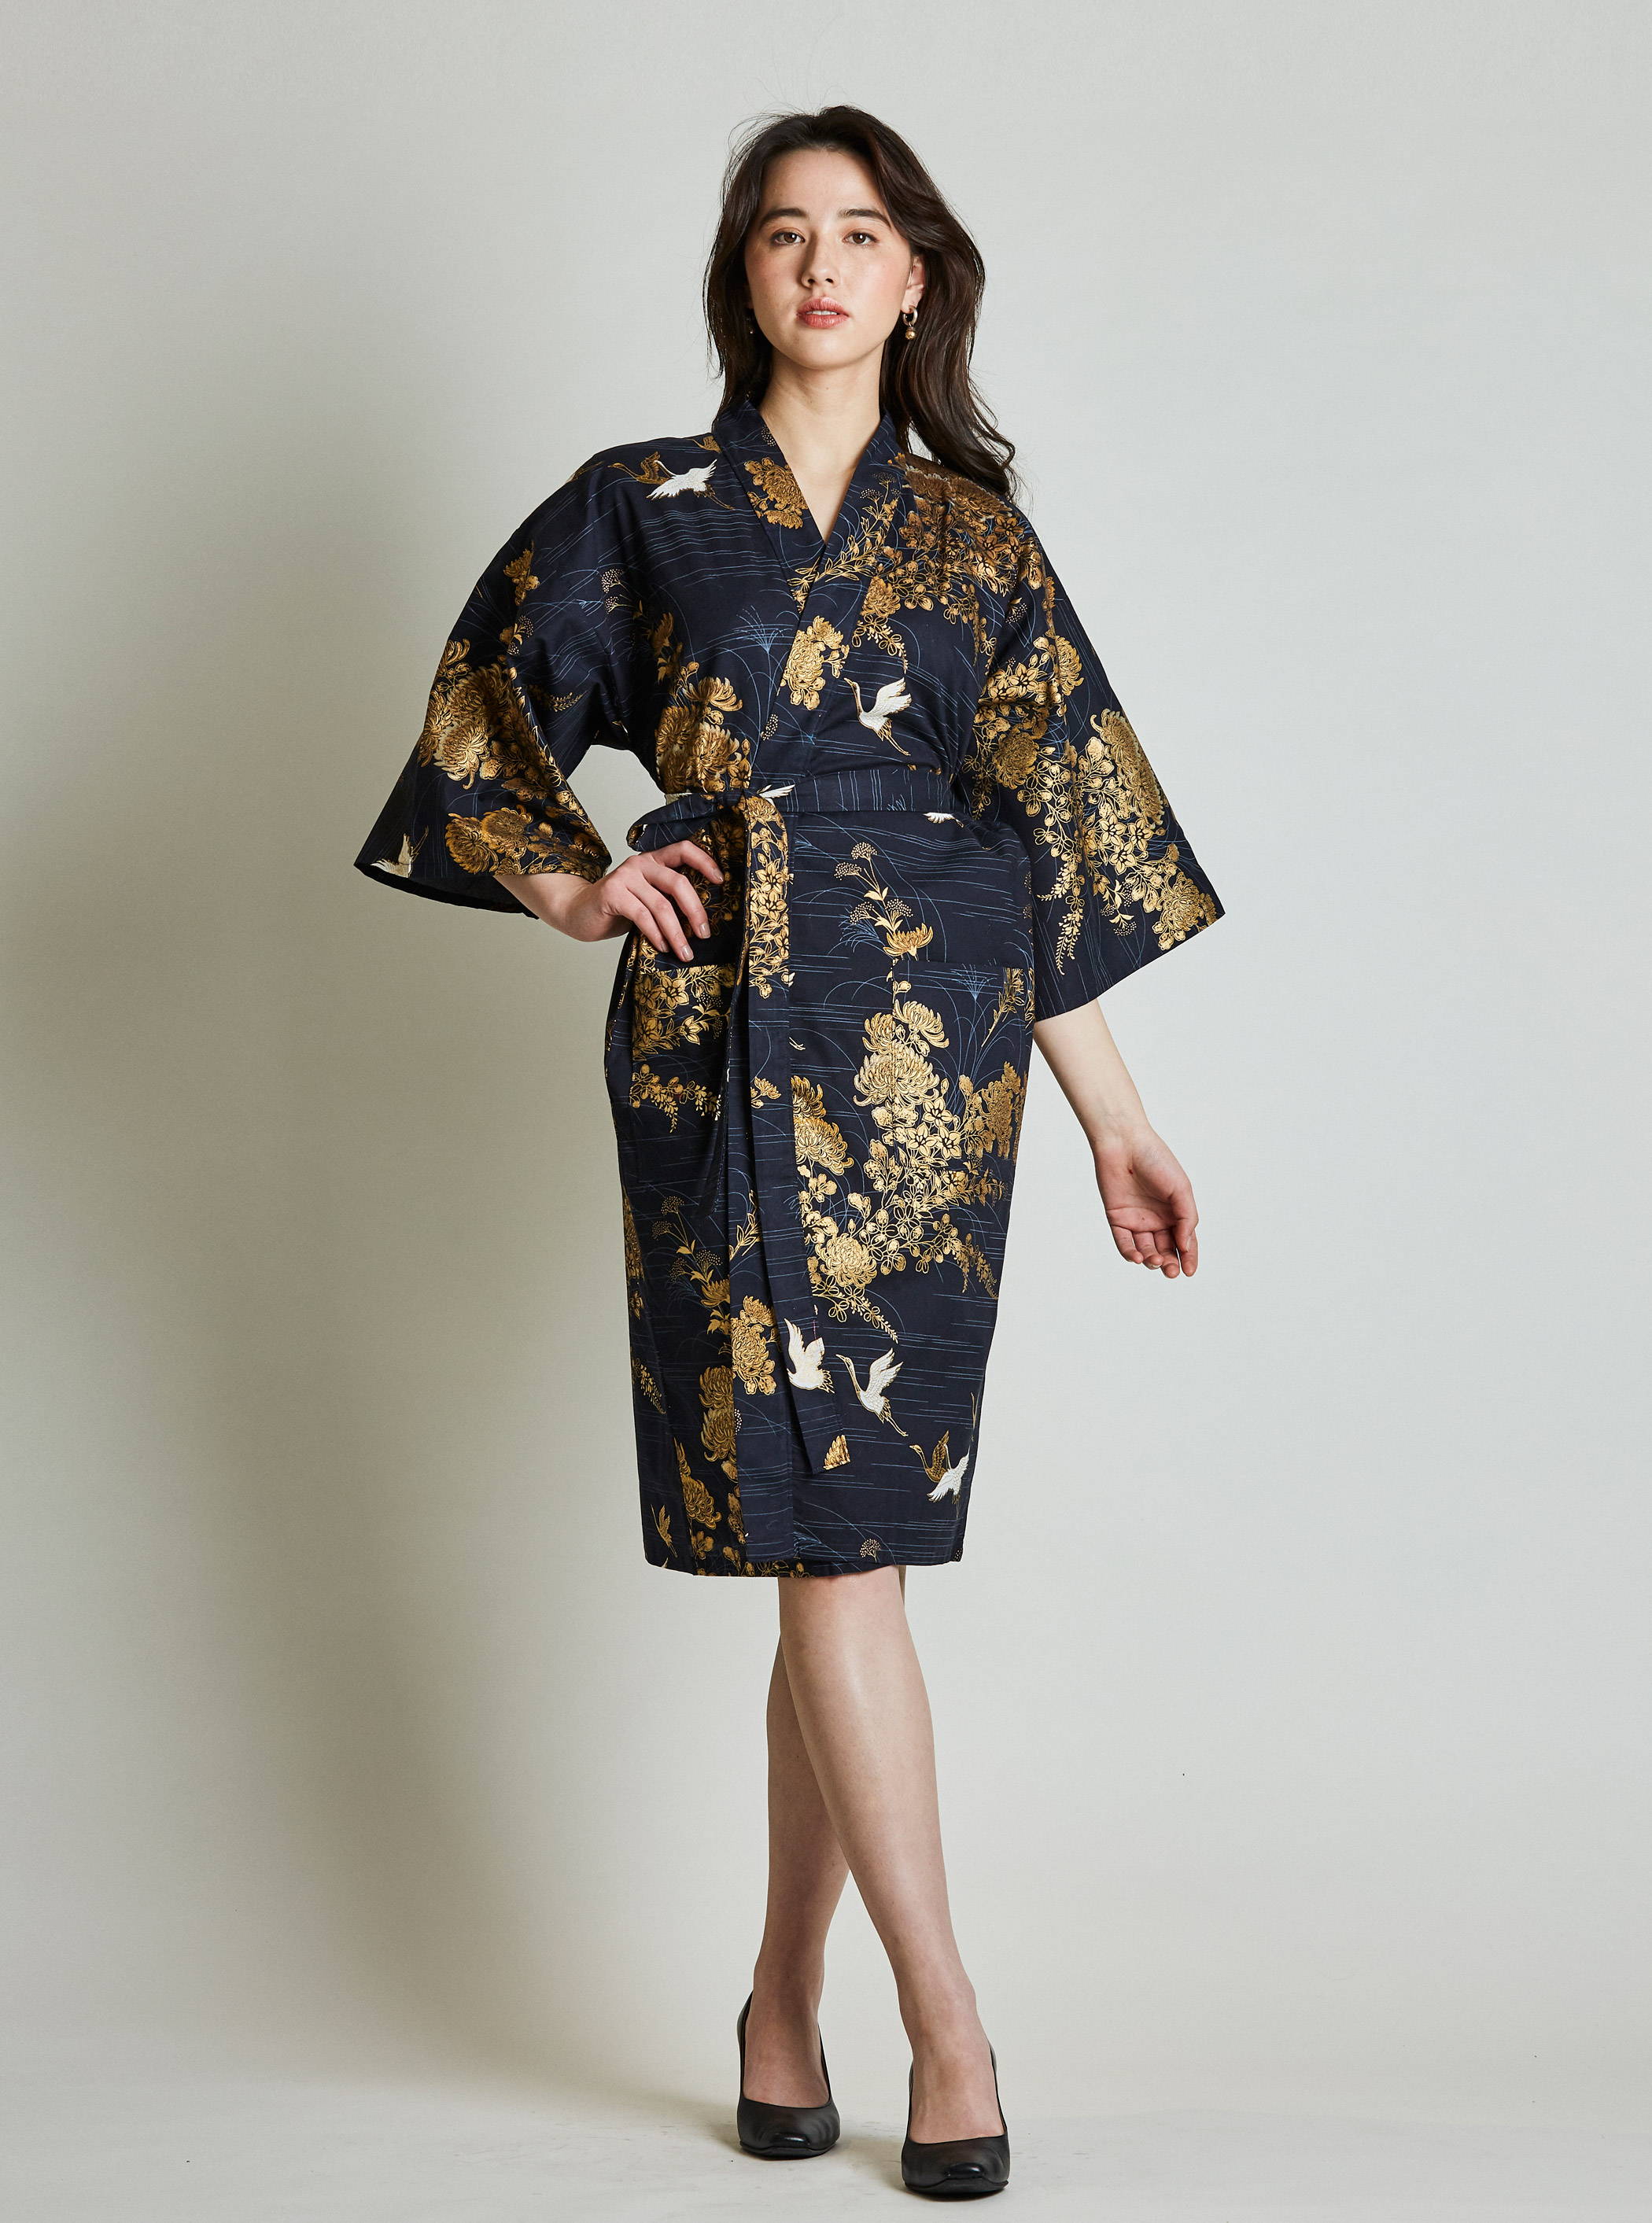 japanese dress